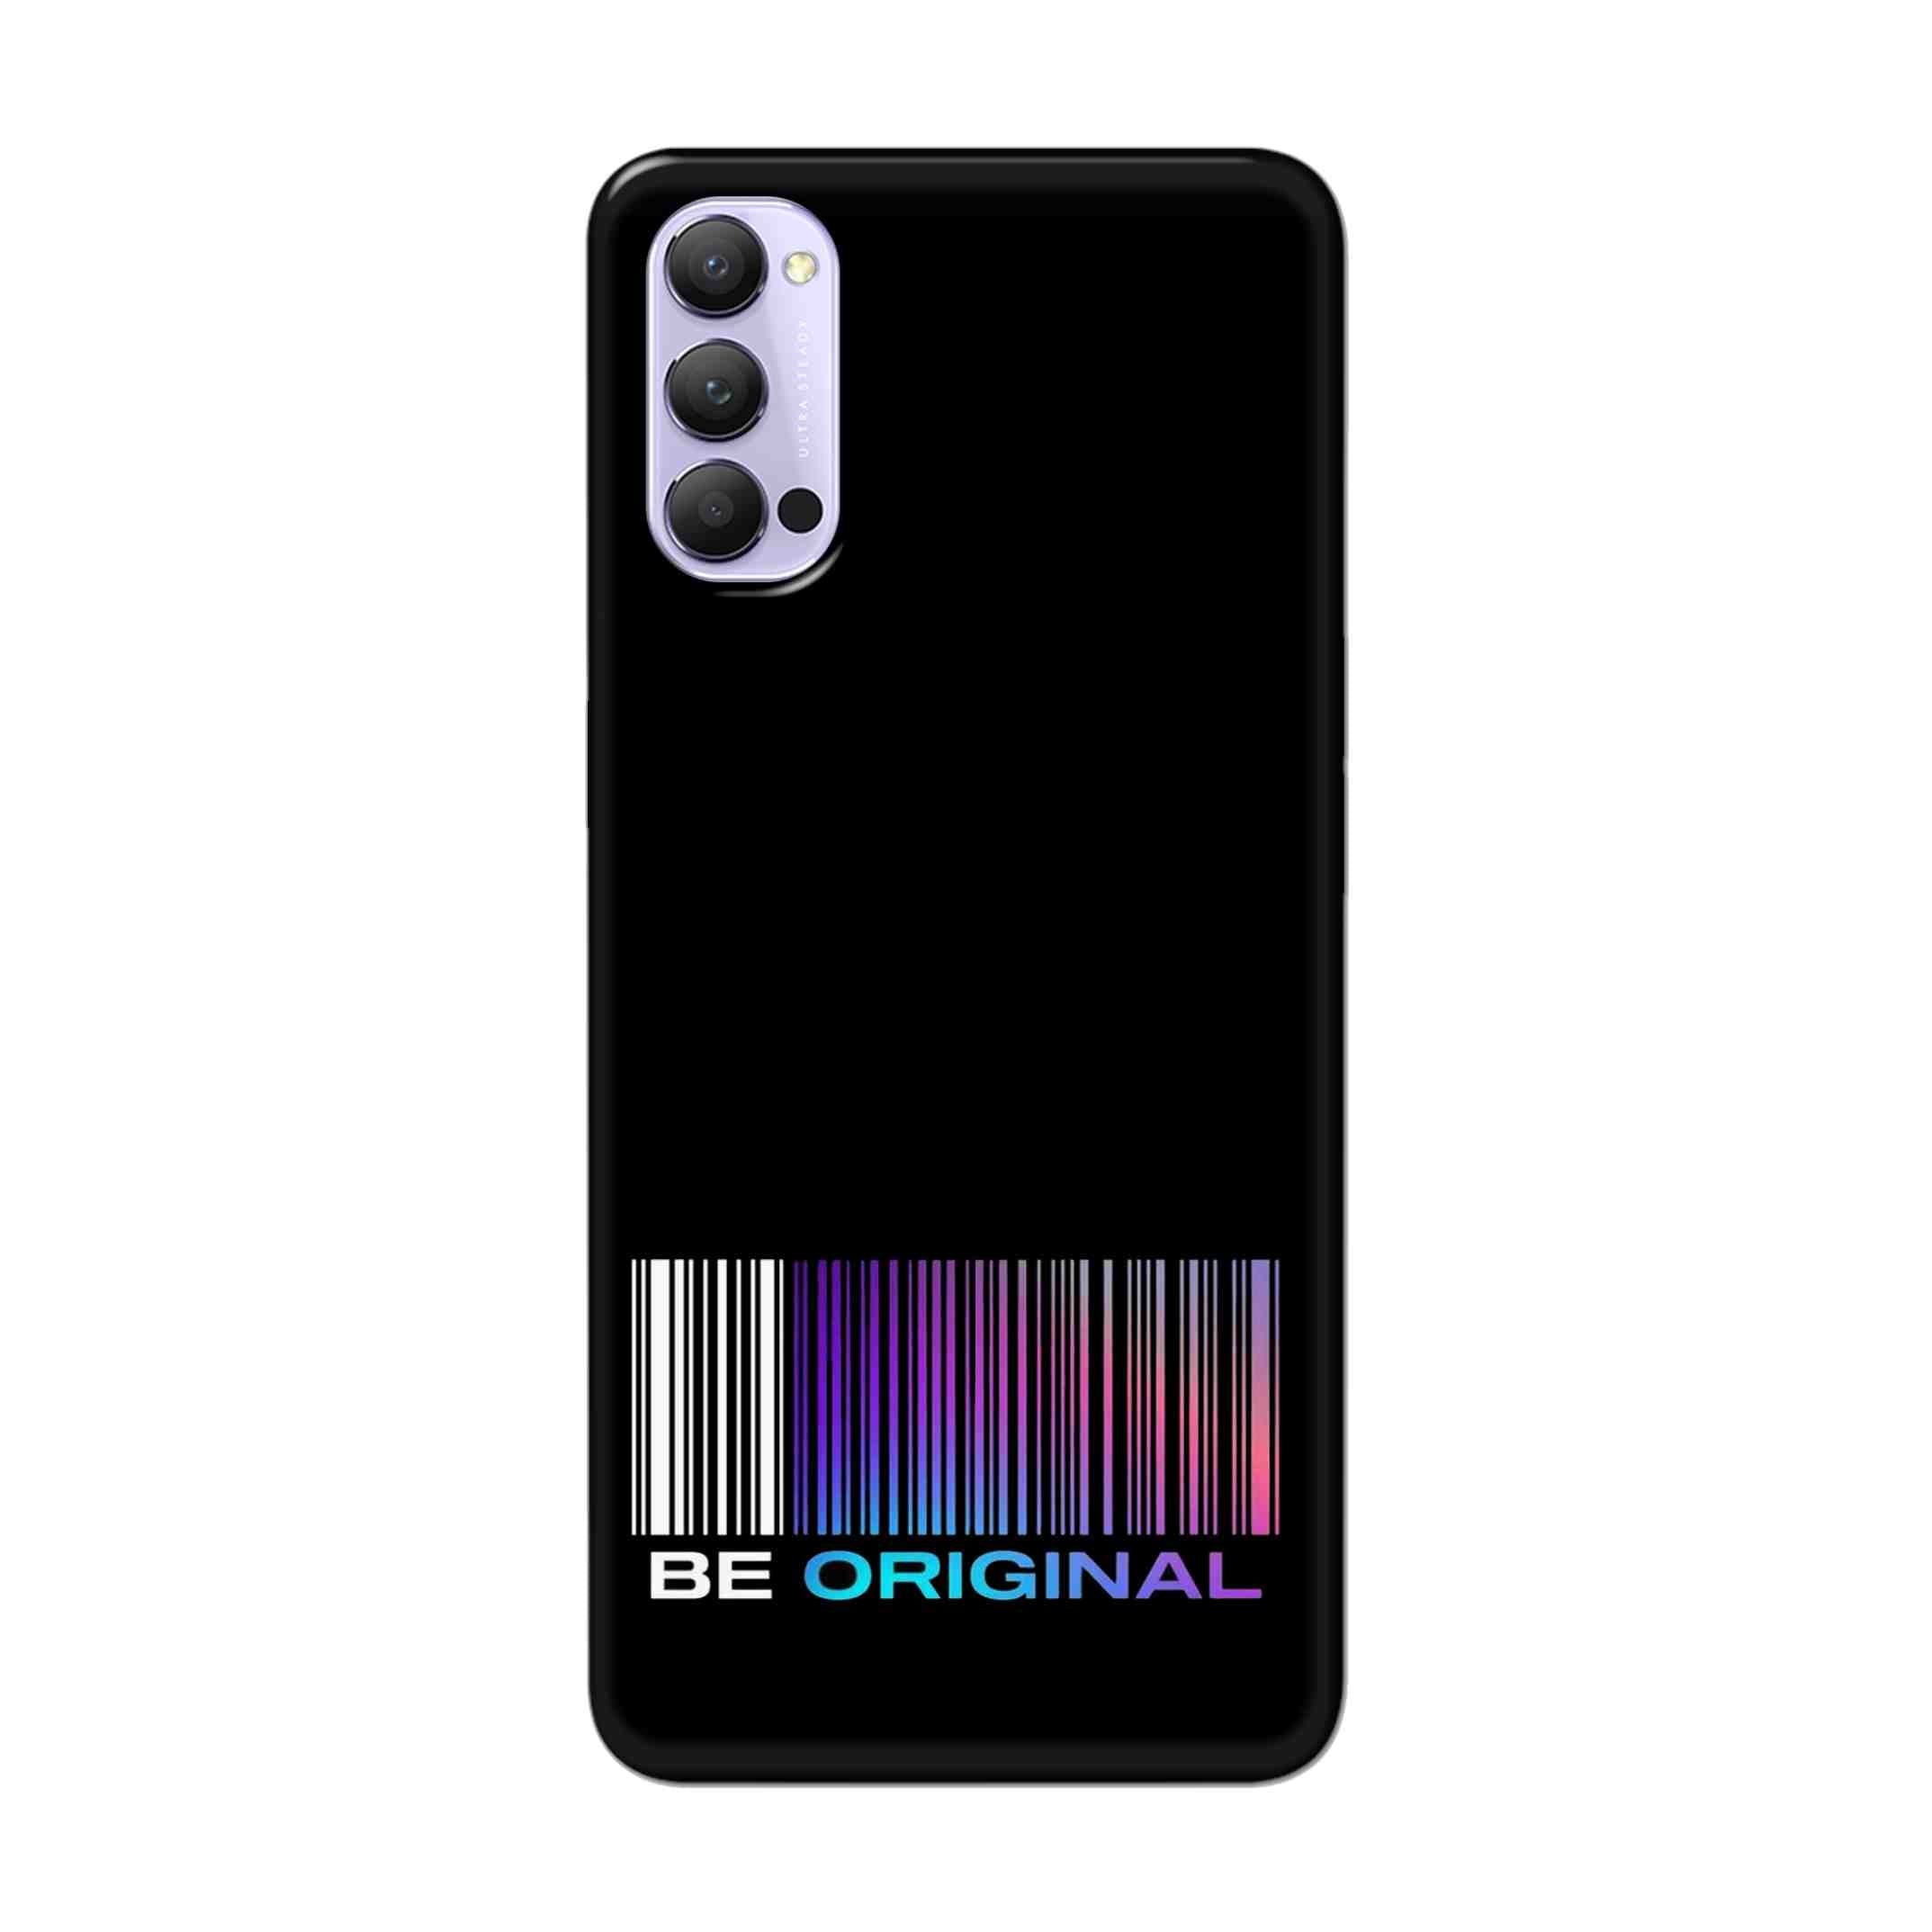 Buy Be Original Hard Back Mobile Phone Case Cover For Oppo Reno 4 Pro Online